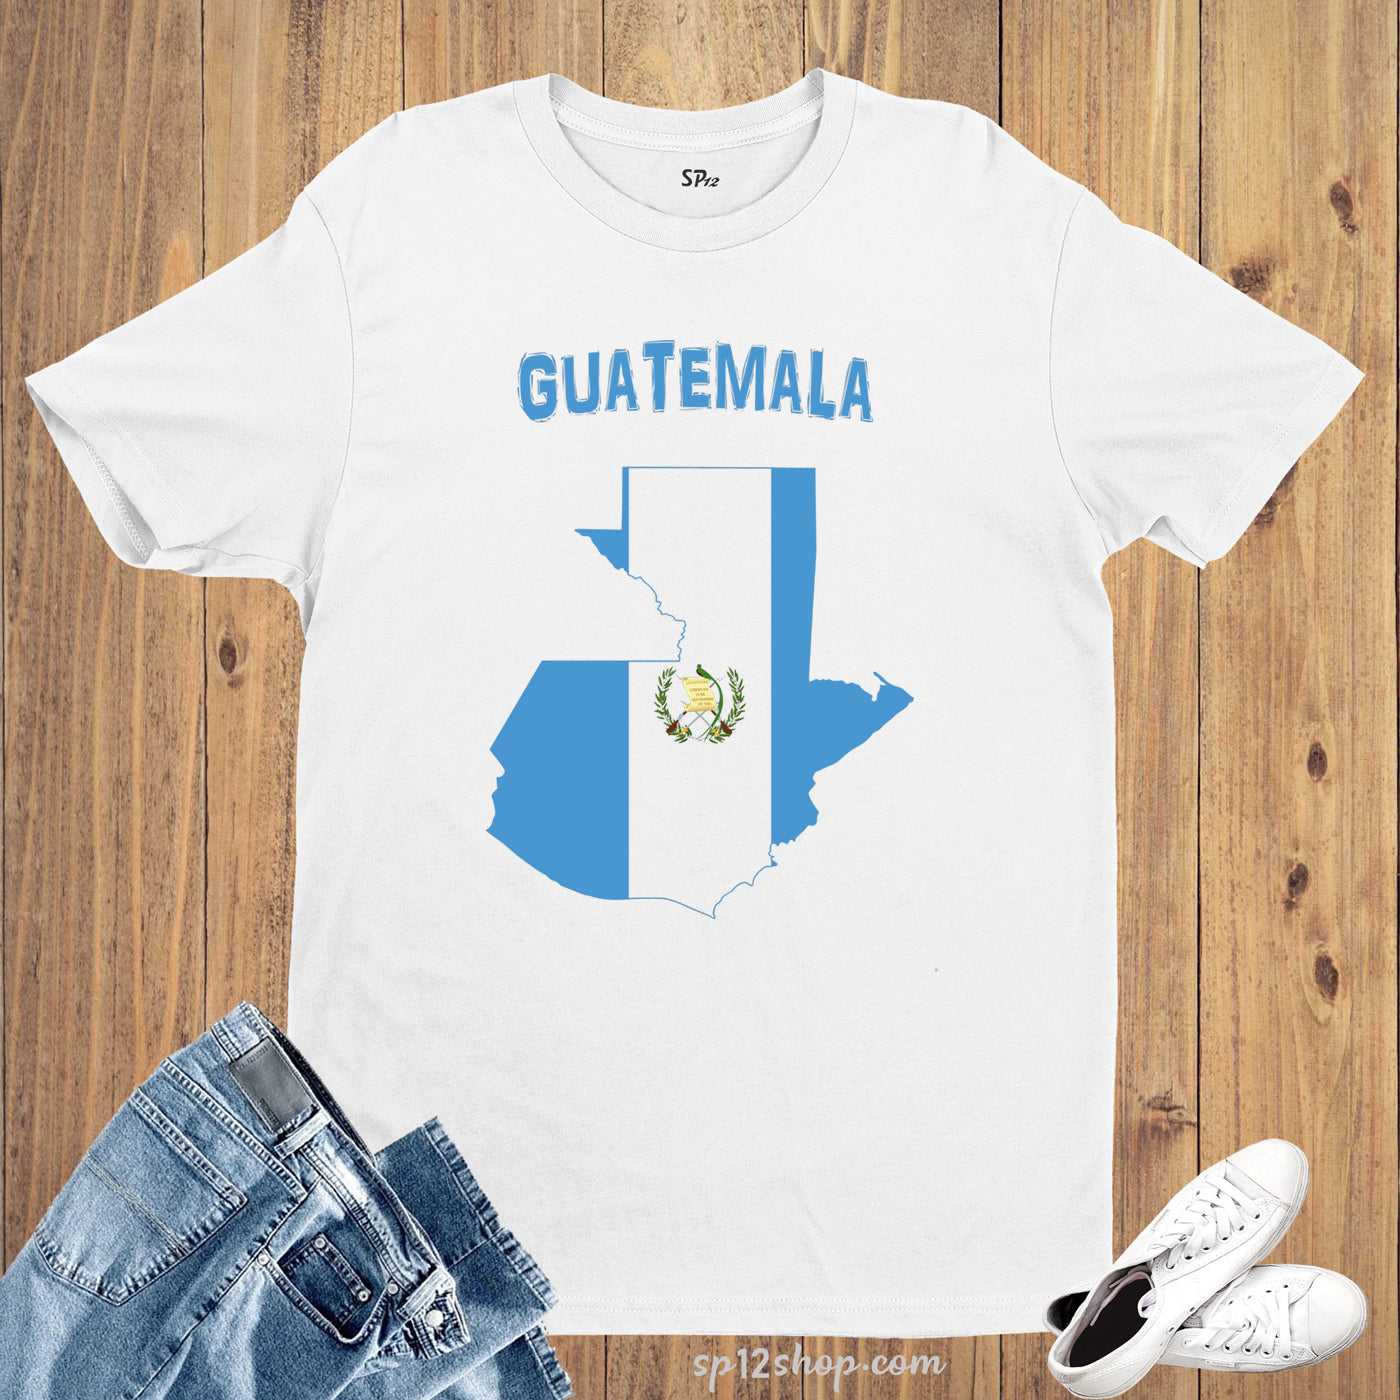 Guatemala Flag T Shirt Olympics FIFA World Cup Country Flag Tee Shirt